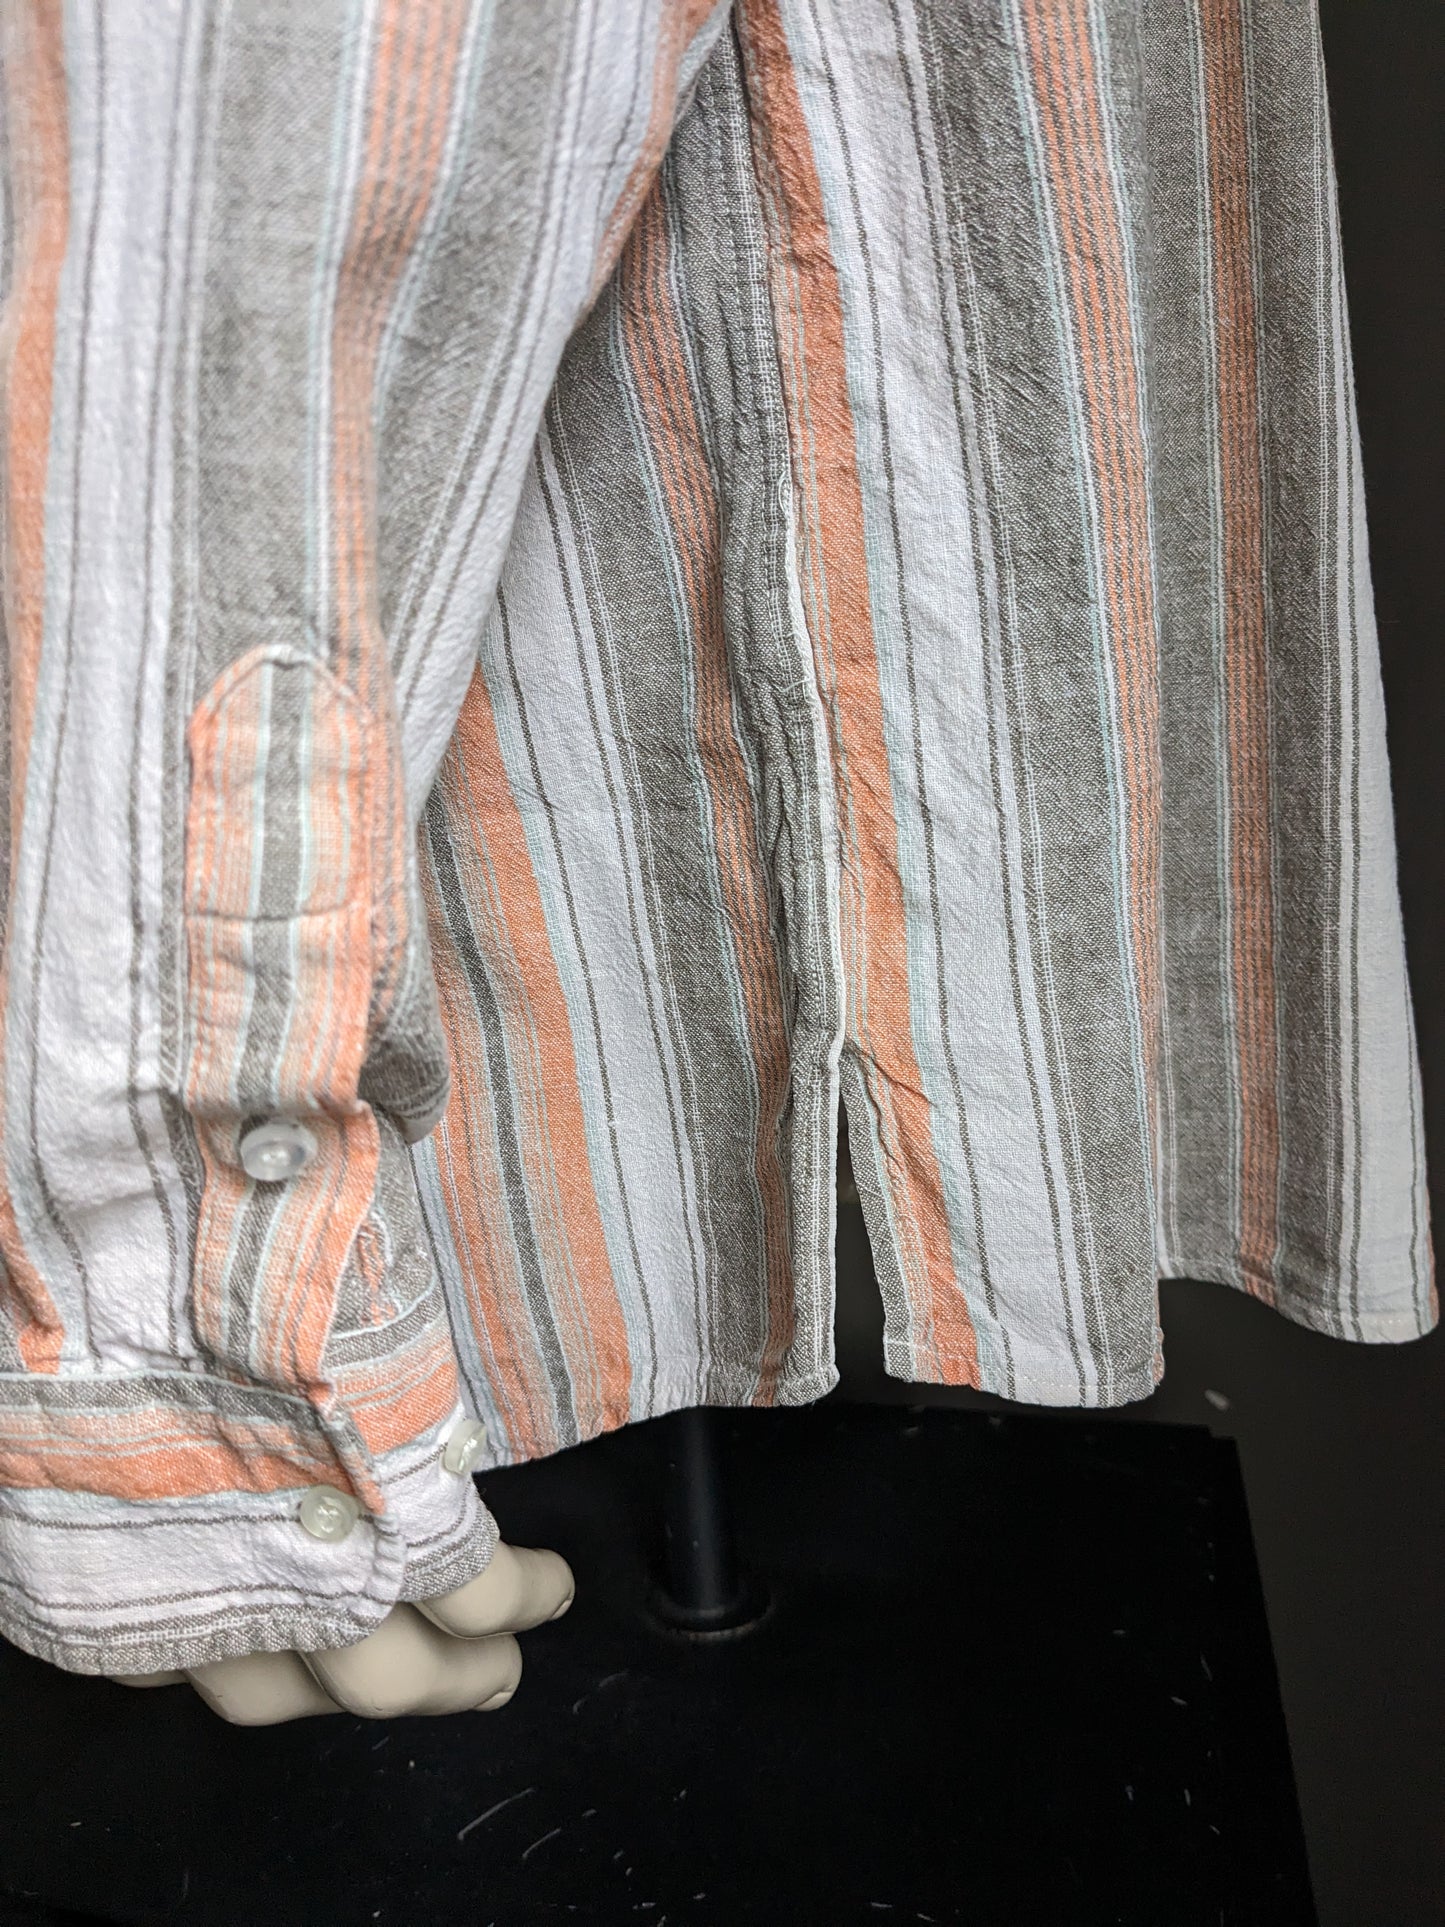 Vintage GW polo sweater / shirt with raised / farmers / mao collar. Orange gray striped. 55% linen. Size XXL.